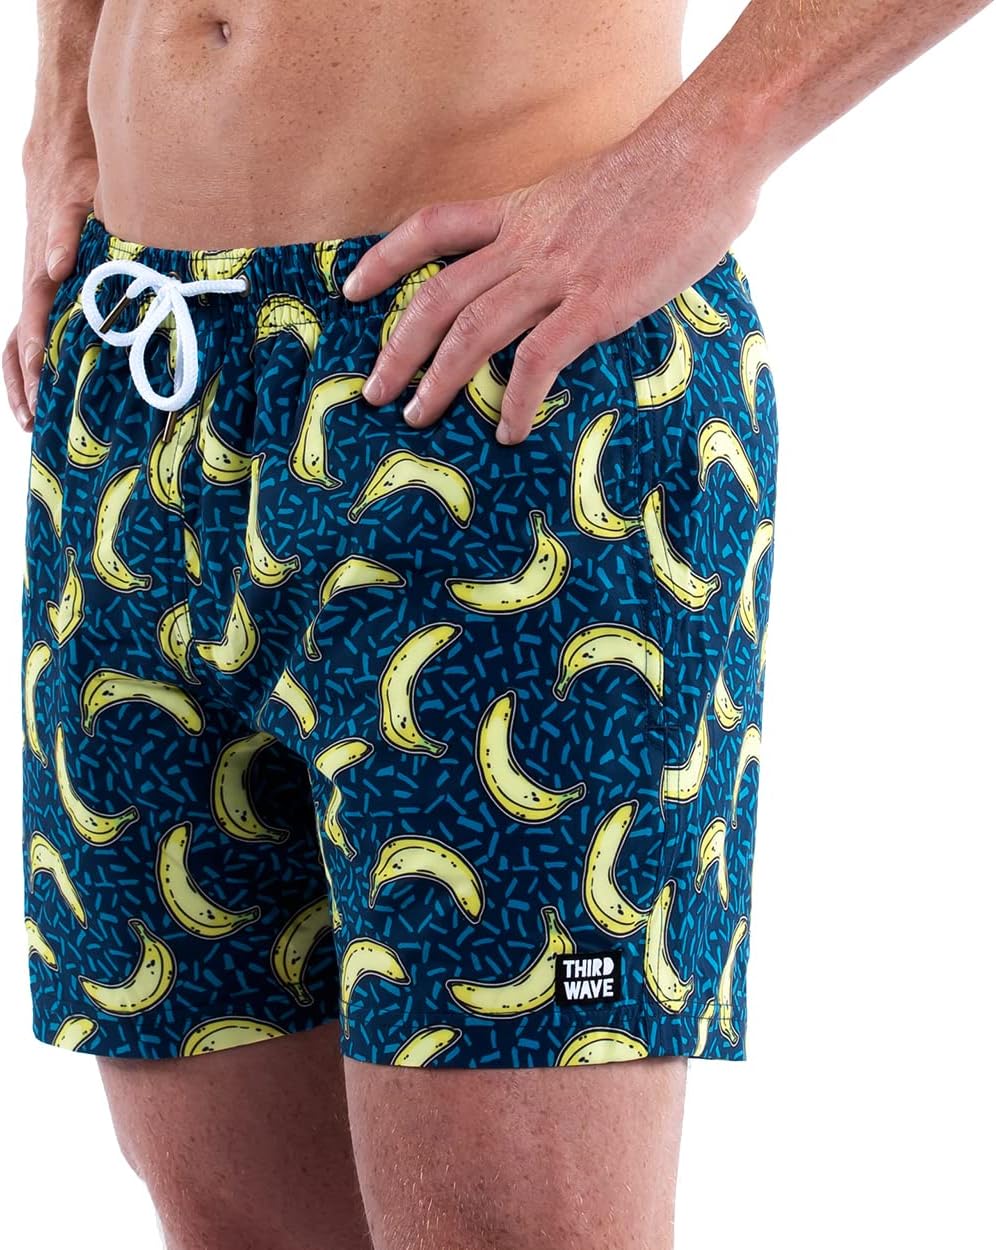 Premium Swim Trunks - Men'S 5 Inch Inseam Quick Dry Swim Shorts for Beach and Swimming